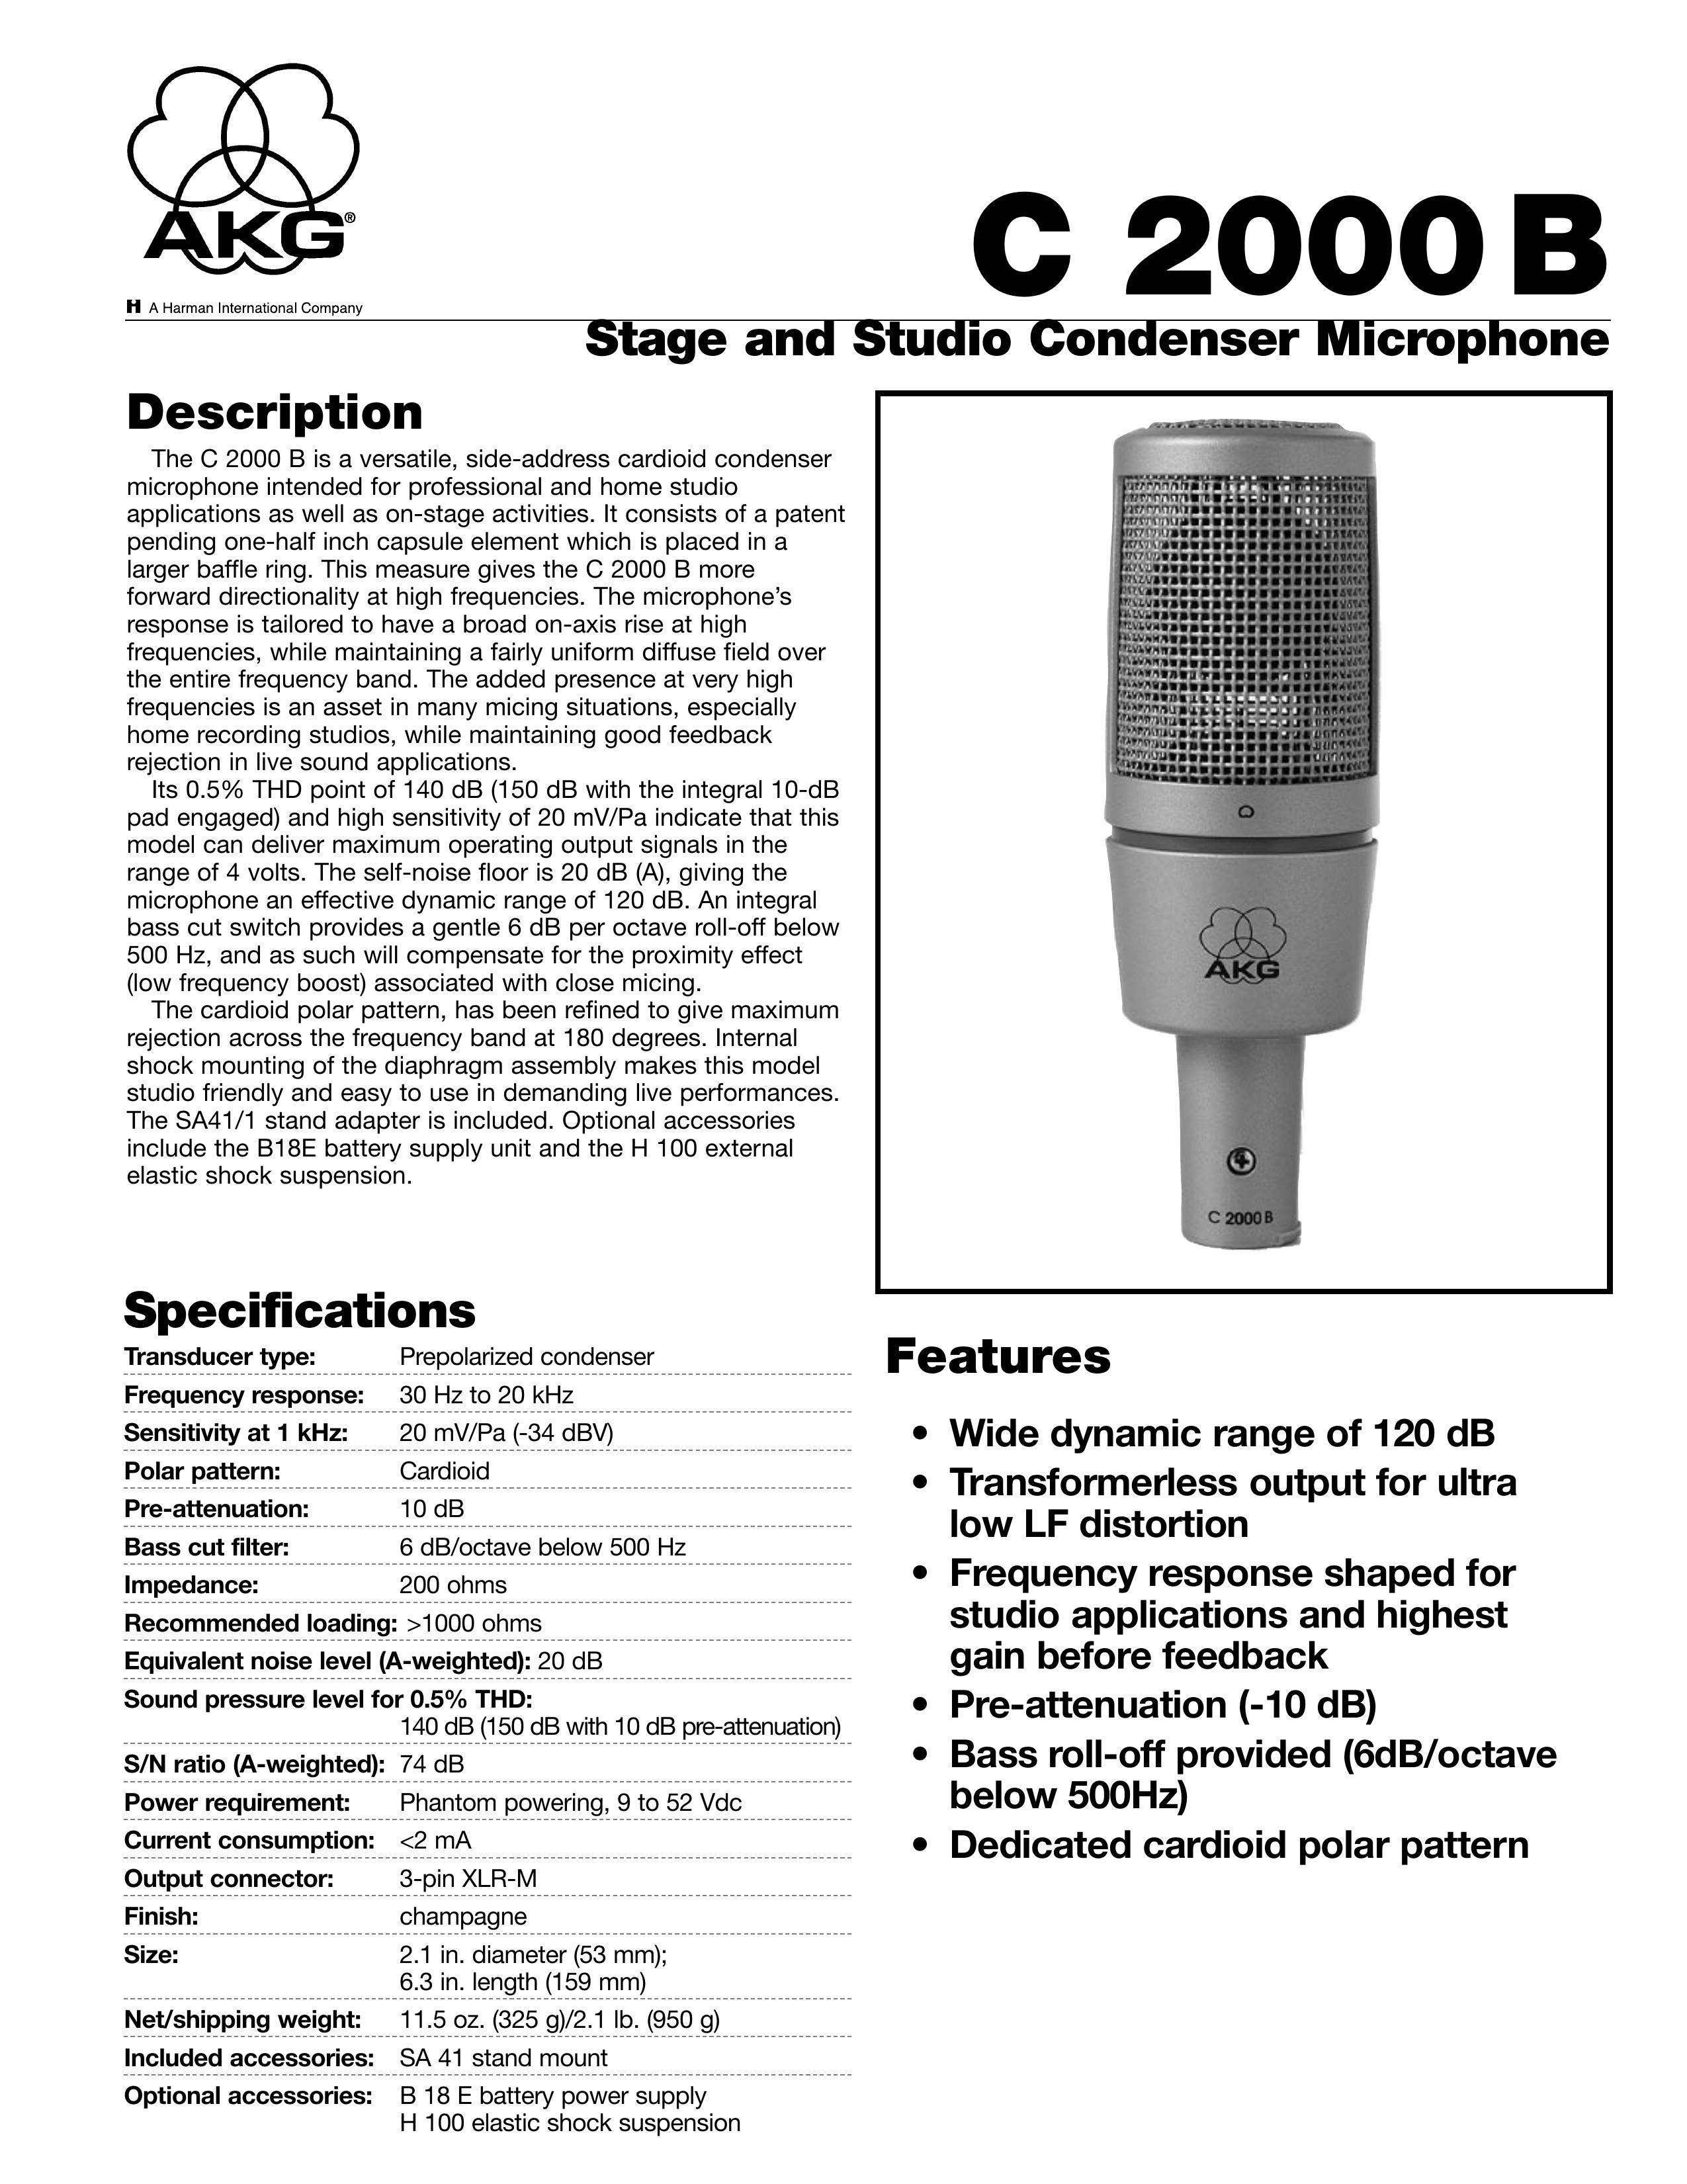 AKG Acoustics C 2000 B Microphone User Manual